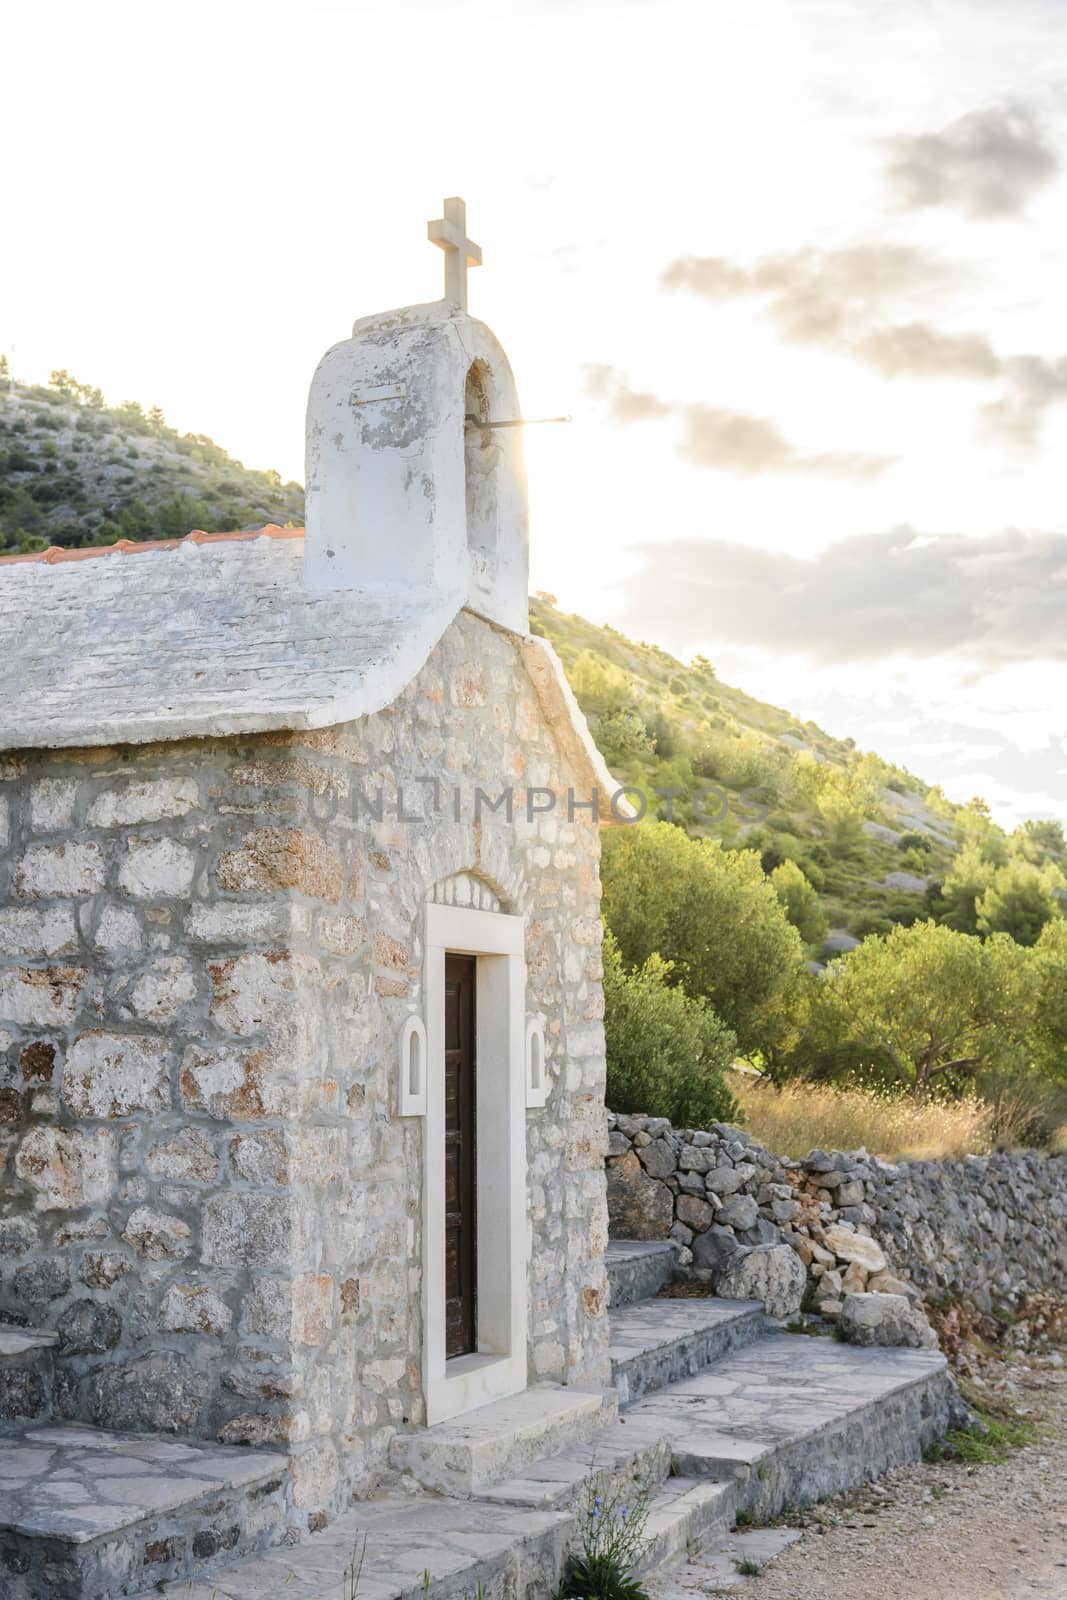 Small stone chappel in the Mediterranean, island of Brac, Croatia / morning daylight